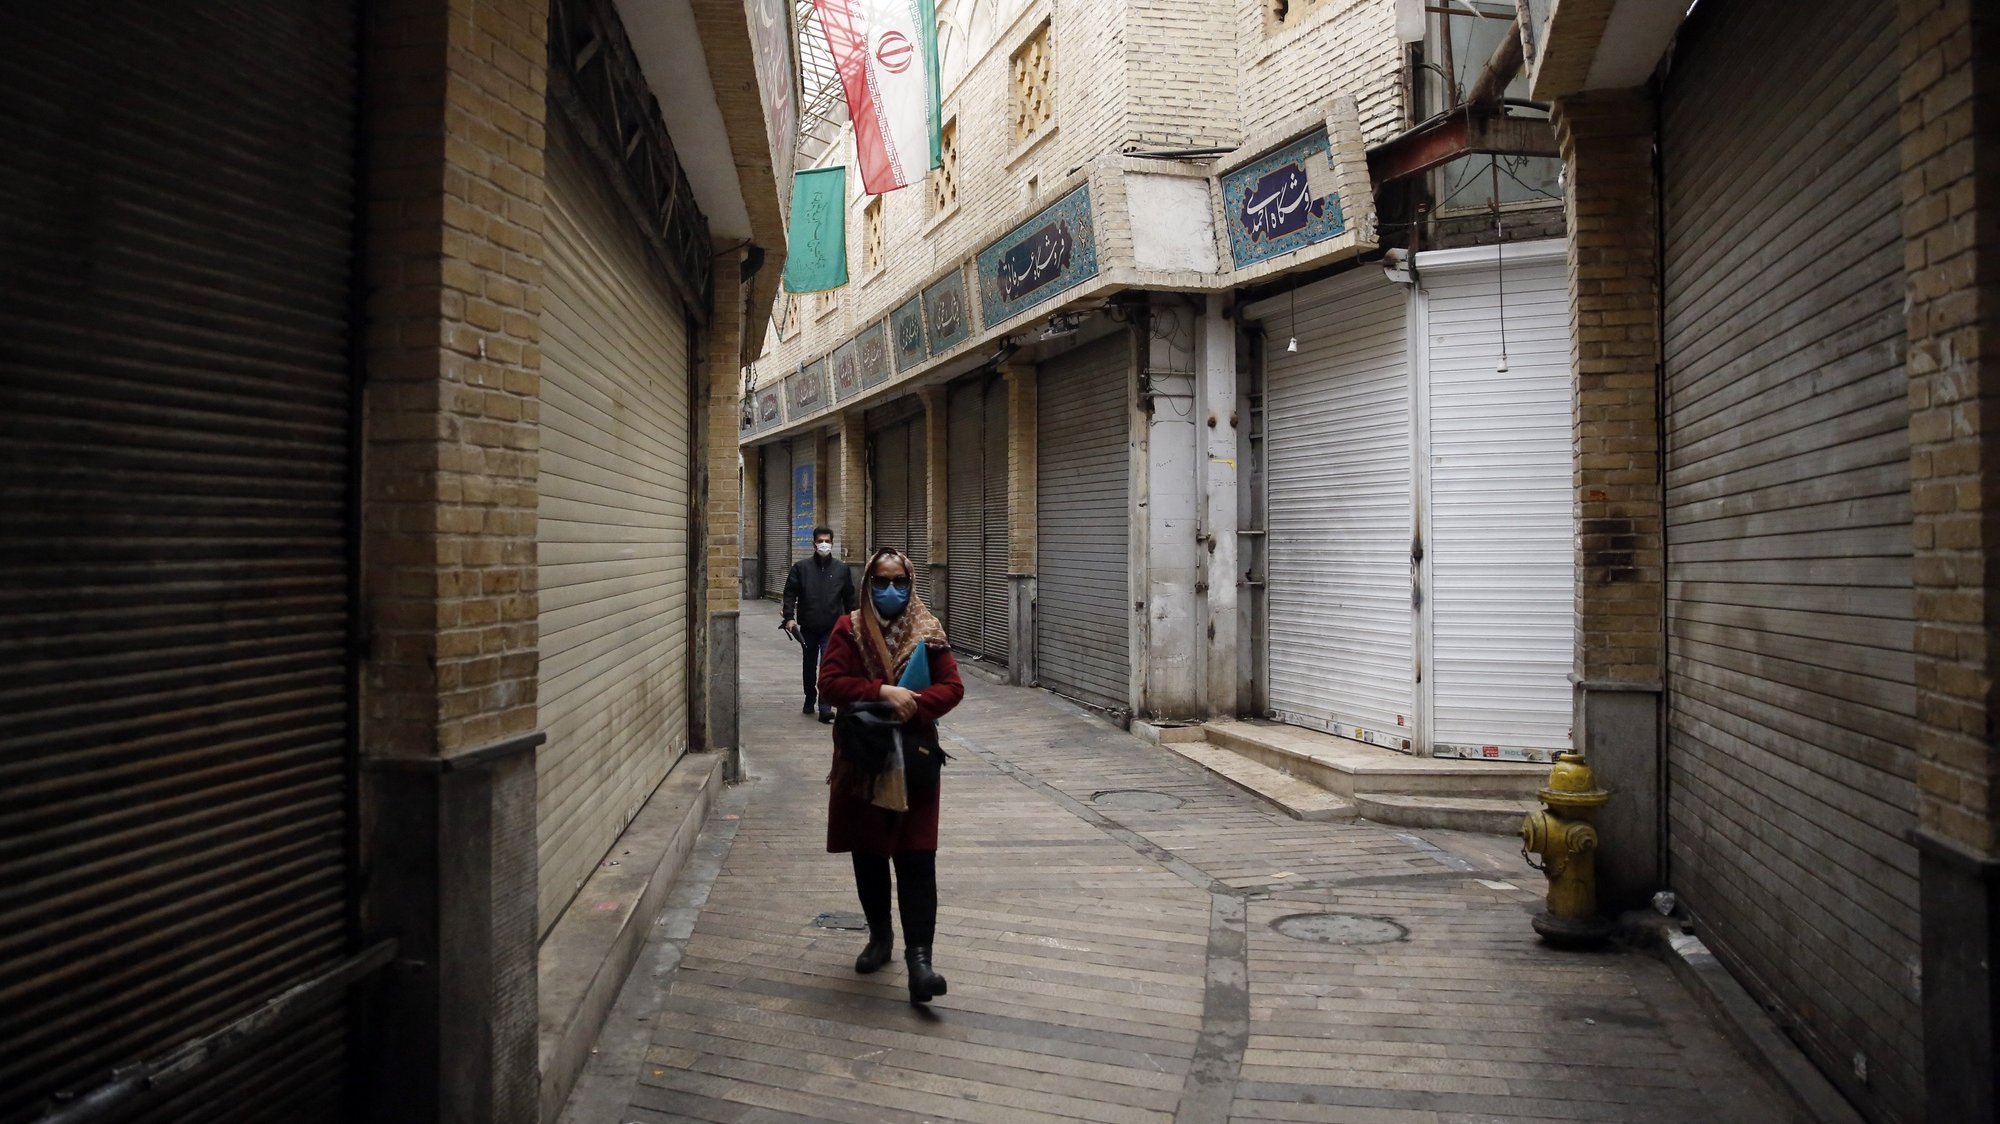 epa08837147 Iranians wearing face masks walk next to closed shops in Tajrish old bazaar  in Tehran, Iran, 23 November 2020. Iranian authorities began a two-week lockdown from 21 November to slow the spread of the Covid-19 in Iran.  EPA/ABEDIN TAHERKENAREH